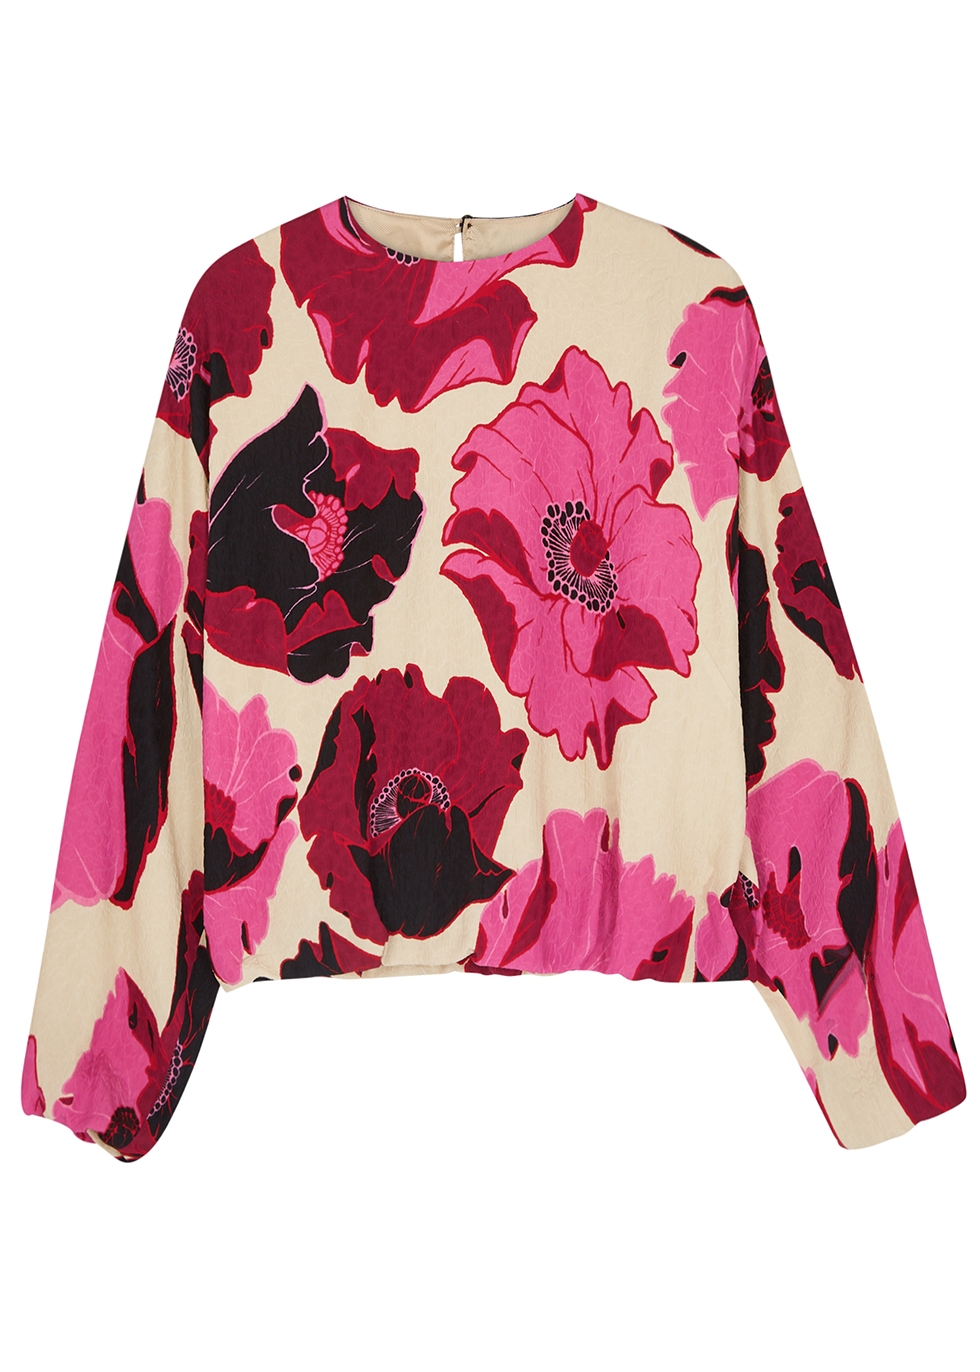 Dries Van Noten Capo floral-print textured blouse - Harvey Nichols